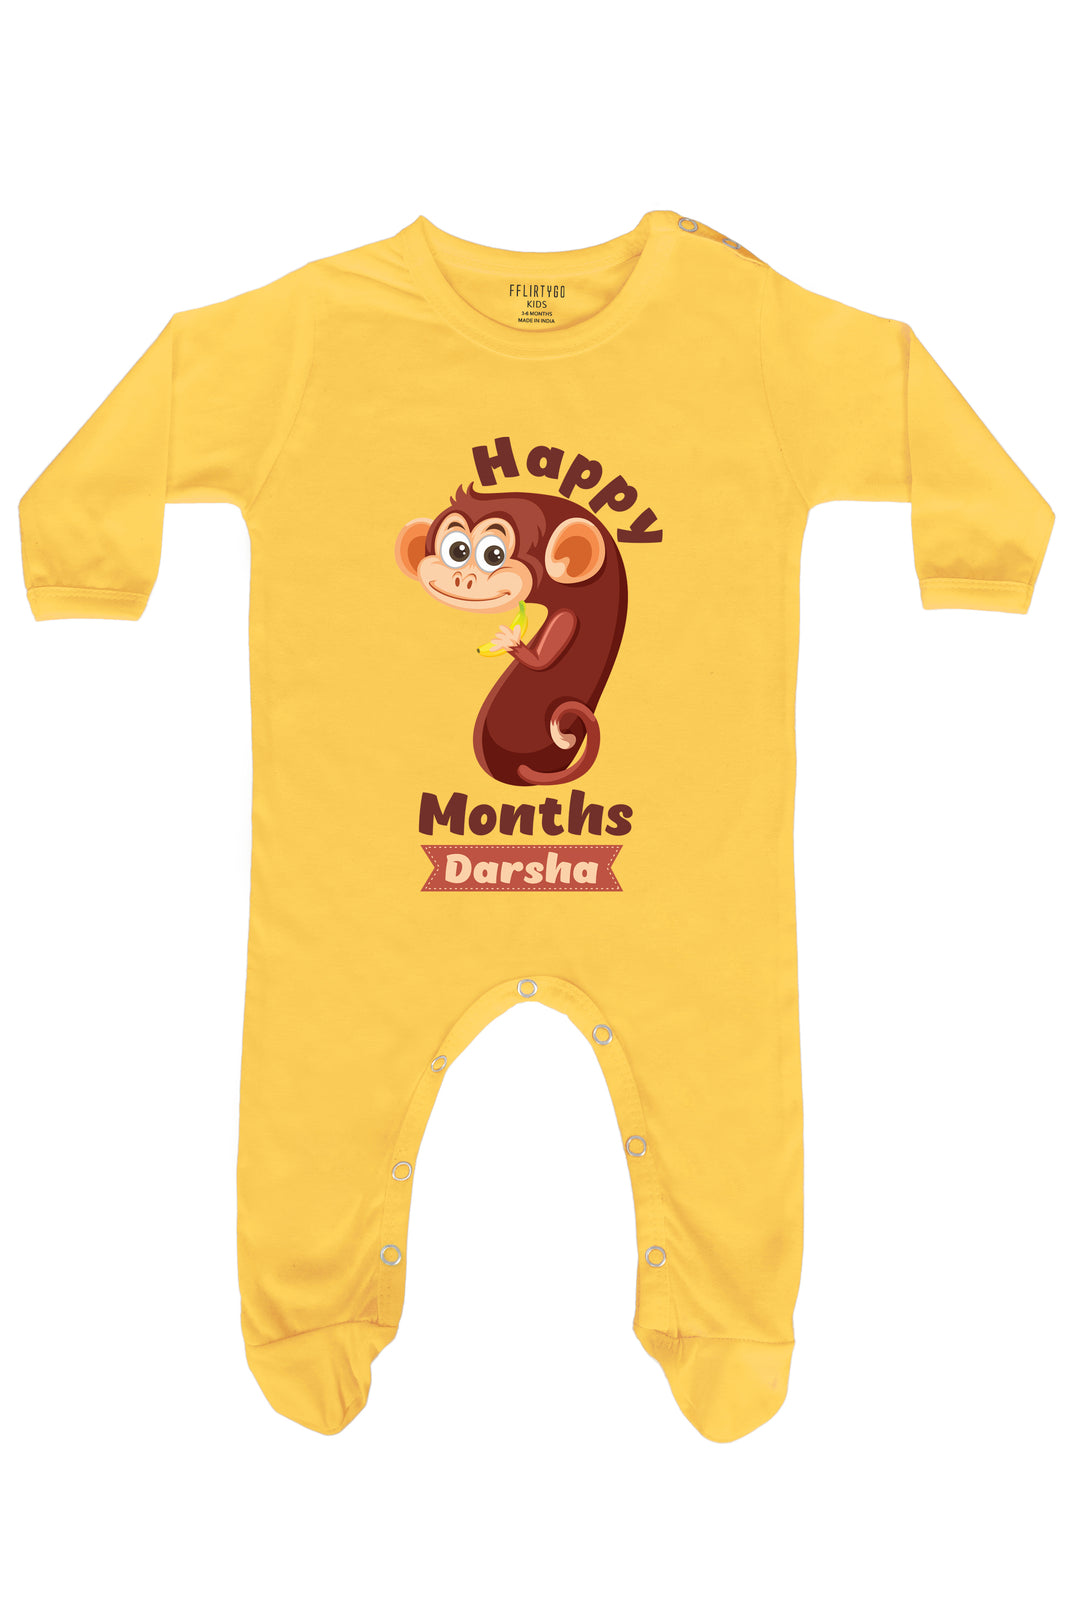 Seven Month Milestone Baby Romper | Onesies w/ Custom Name